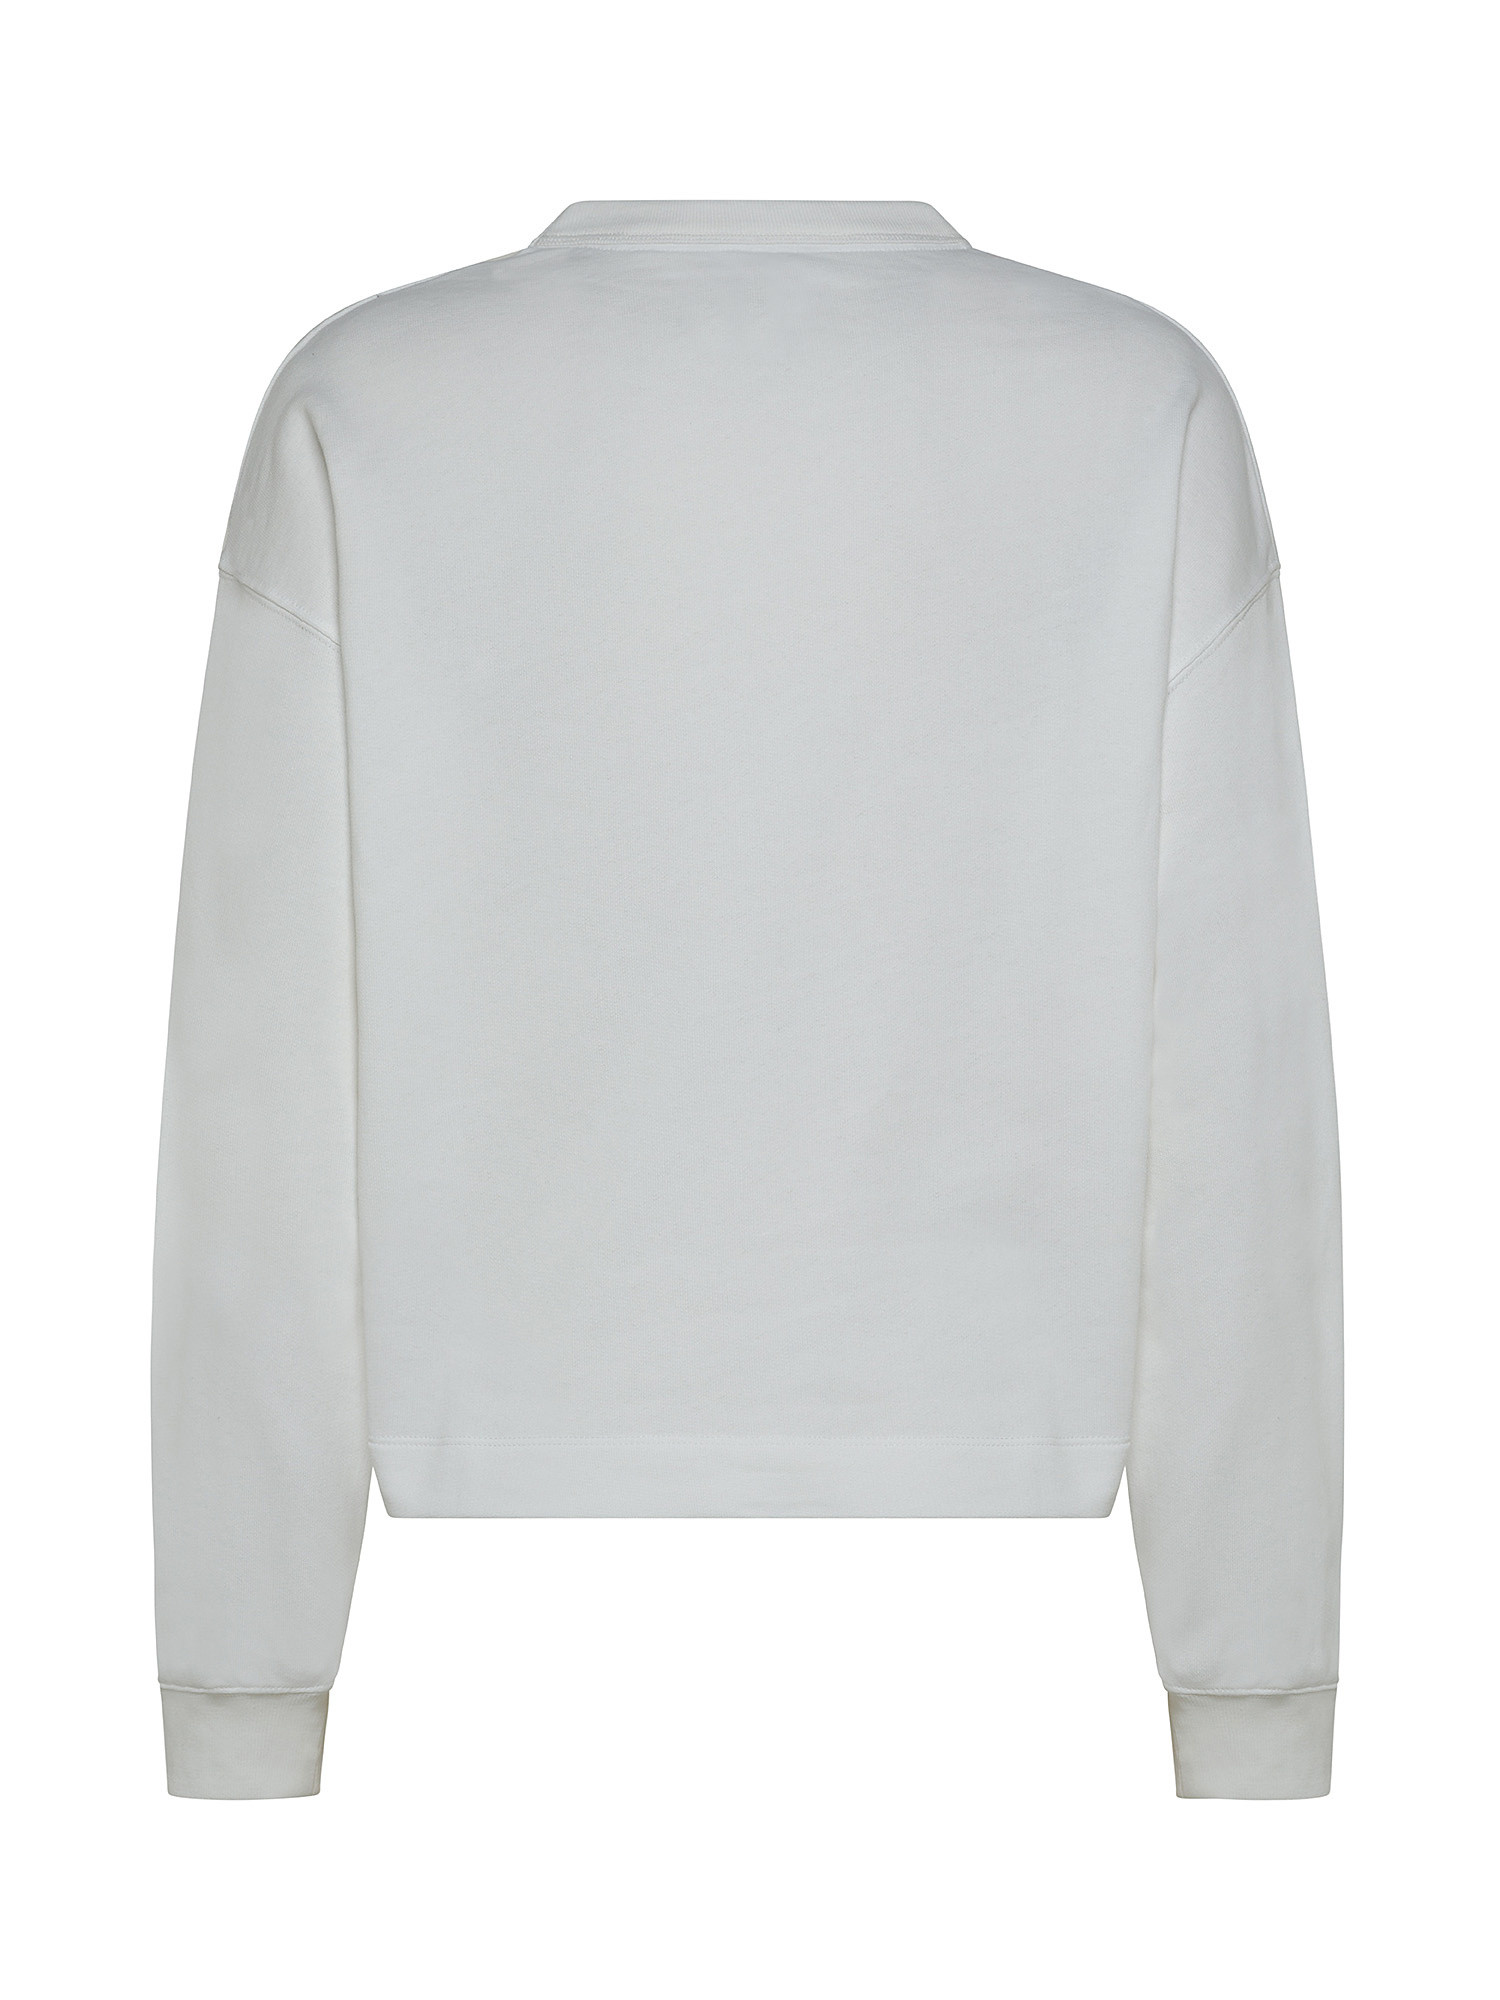 Cotton sweatshirt with logo, White, large image number 1